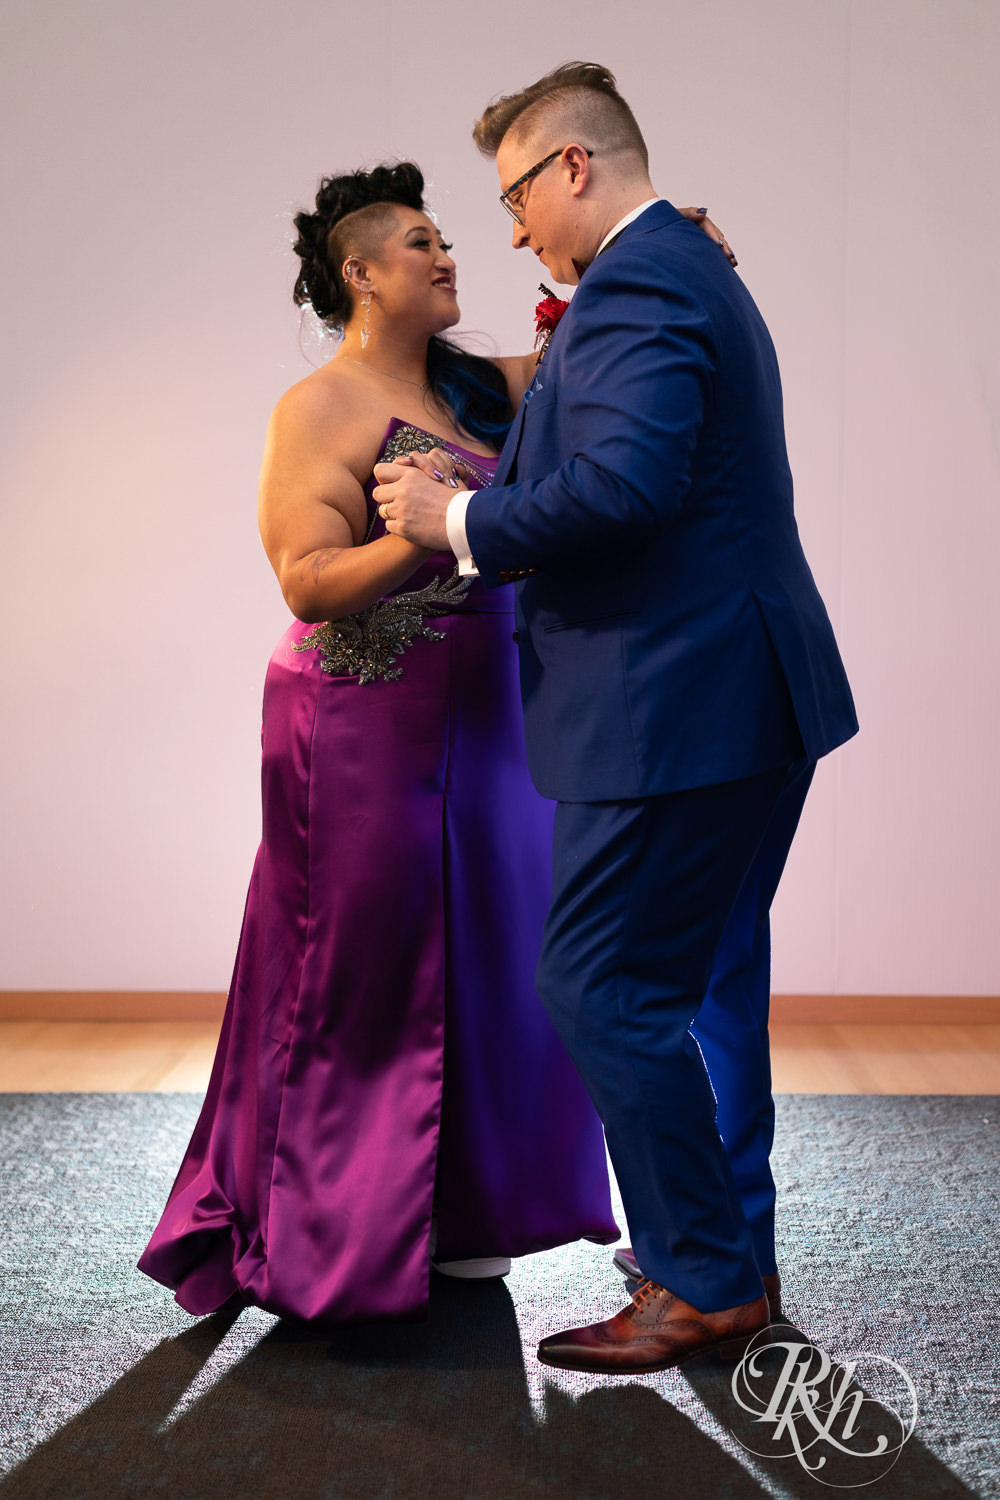 Filipino bride in purple wedding dress share first dance at the American Swedish Institute in Minneapolis, Minnesota.